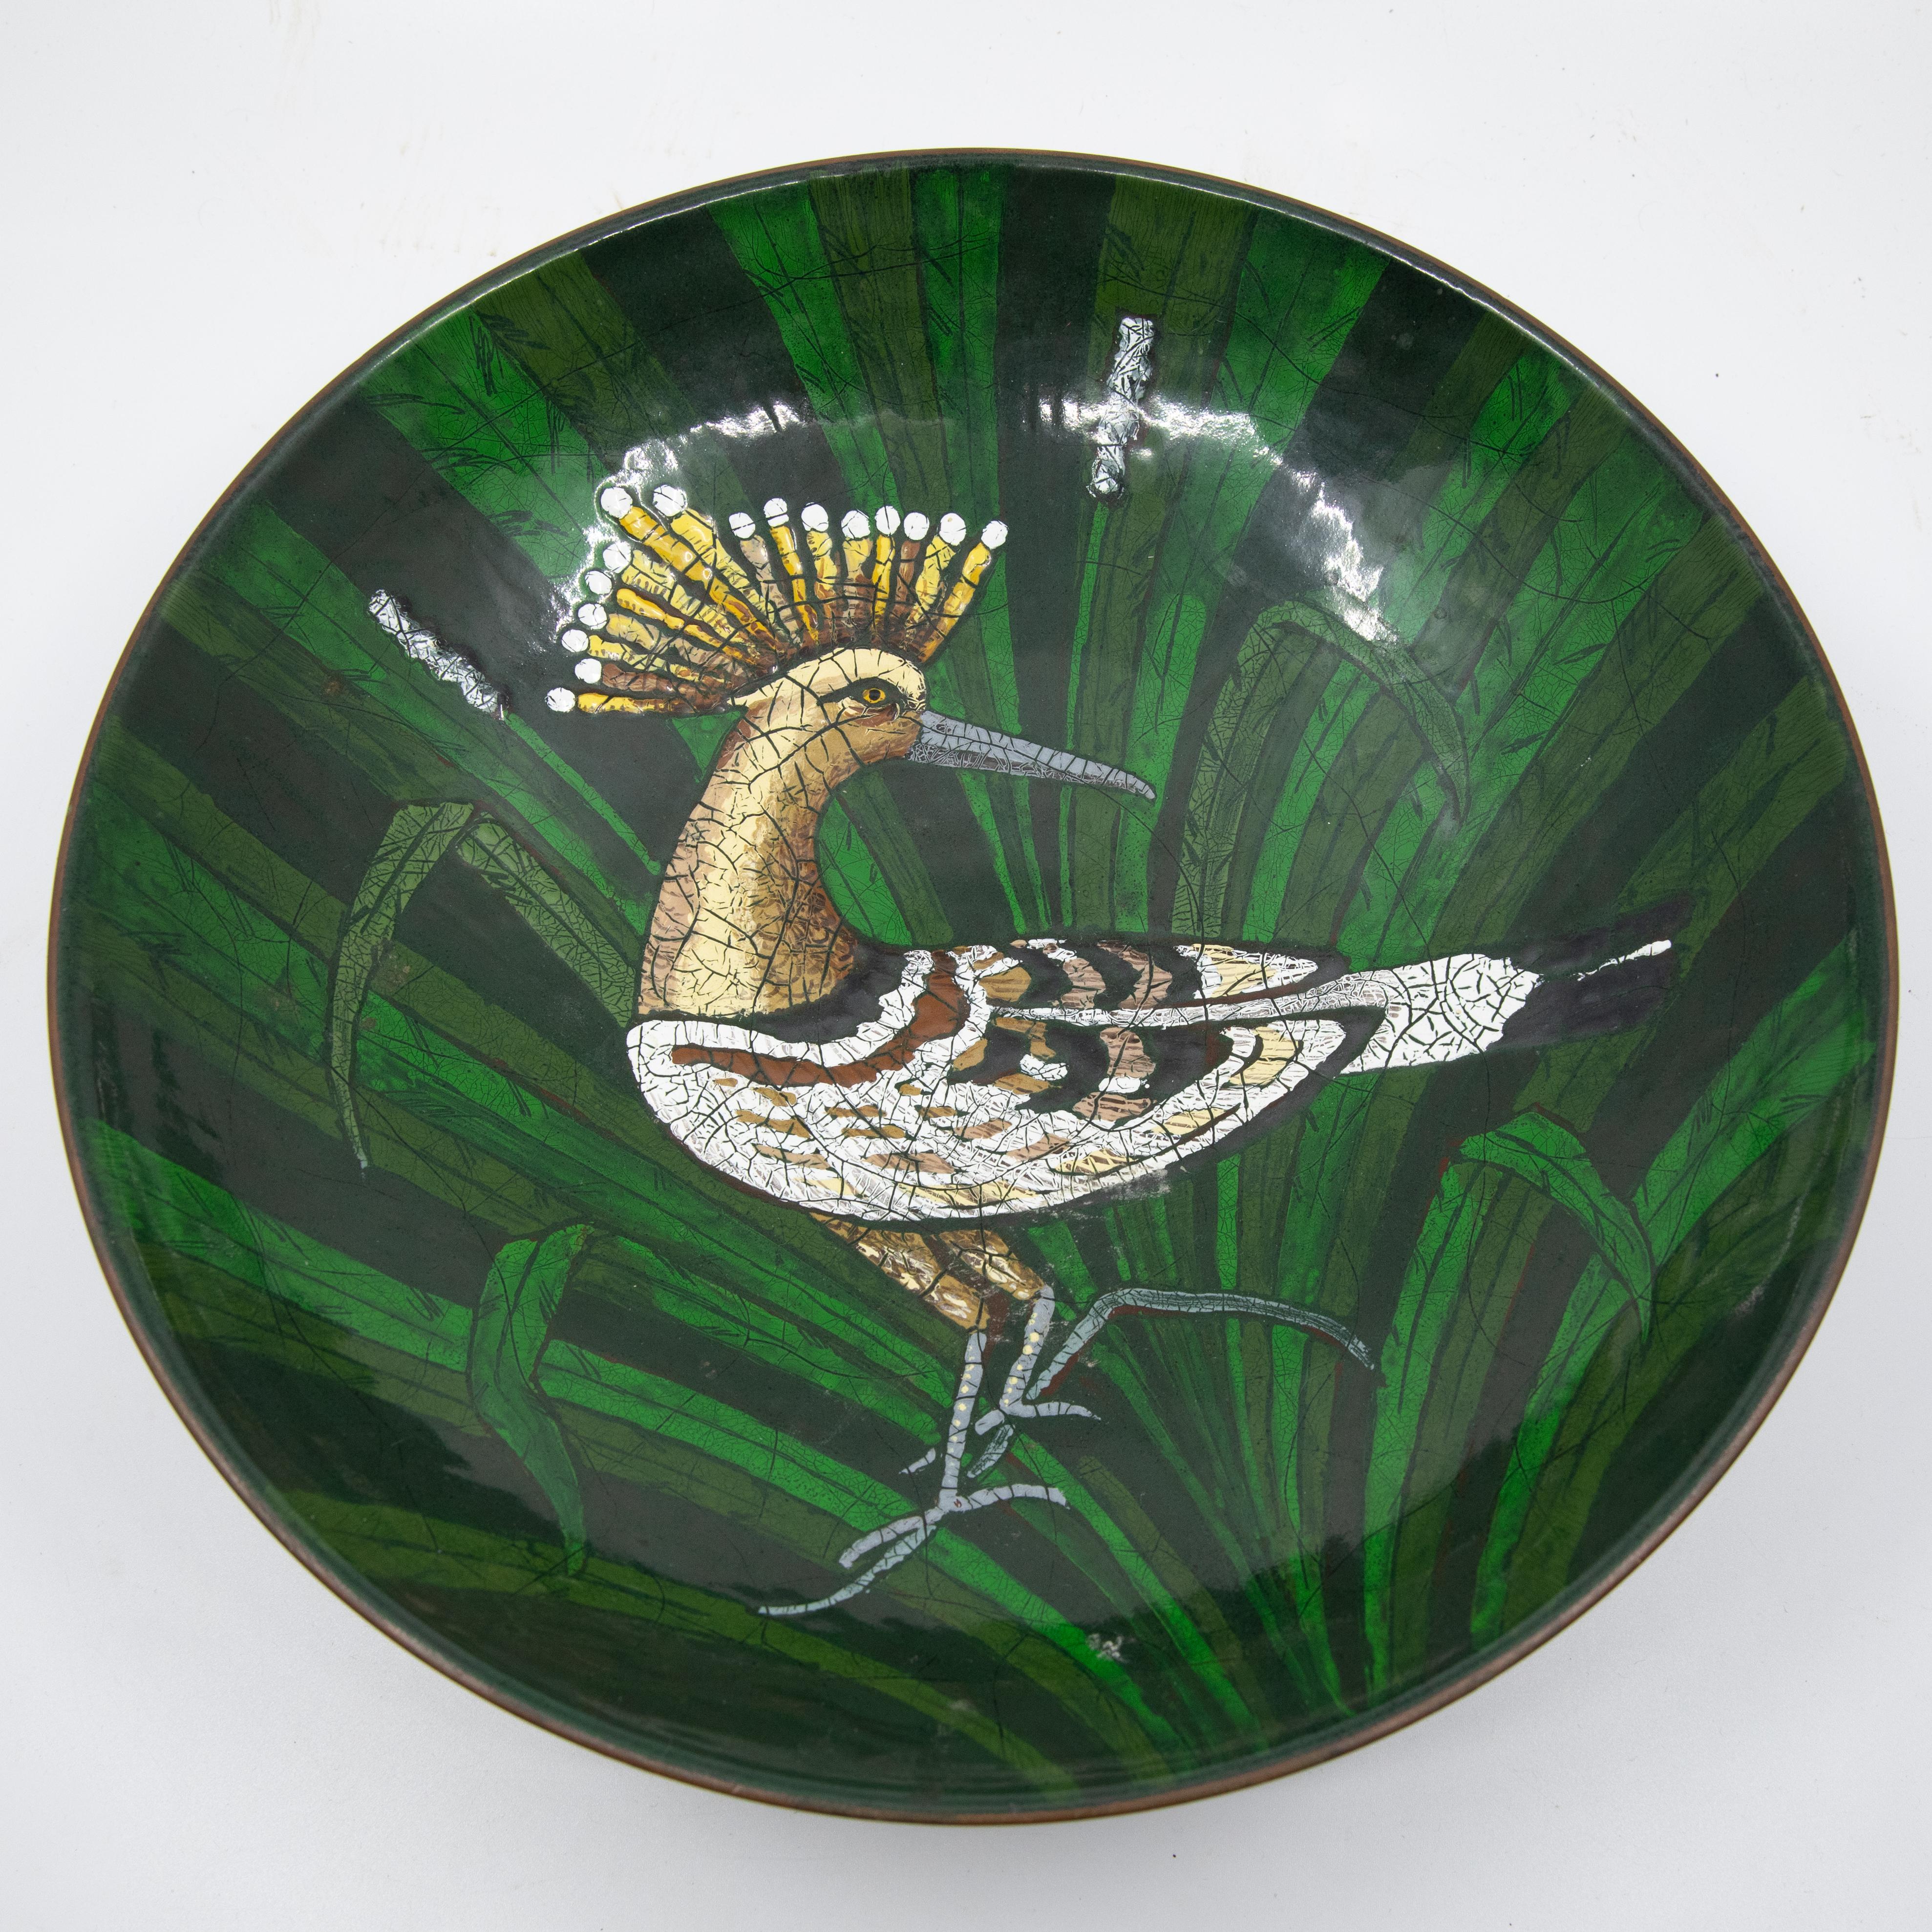 Early 20th century Russian Serge Nekrassoff enamel bowl with bird of paradise. Signed NEKRASSOFF on bottom.